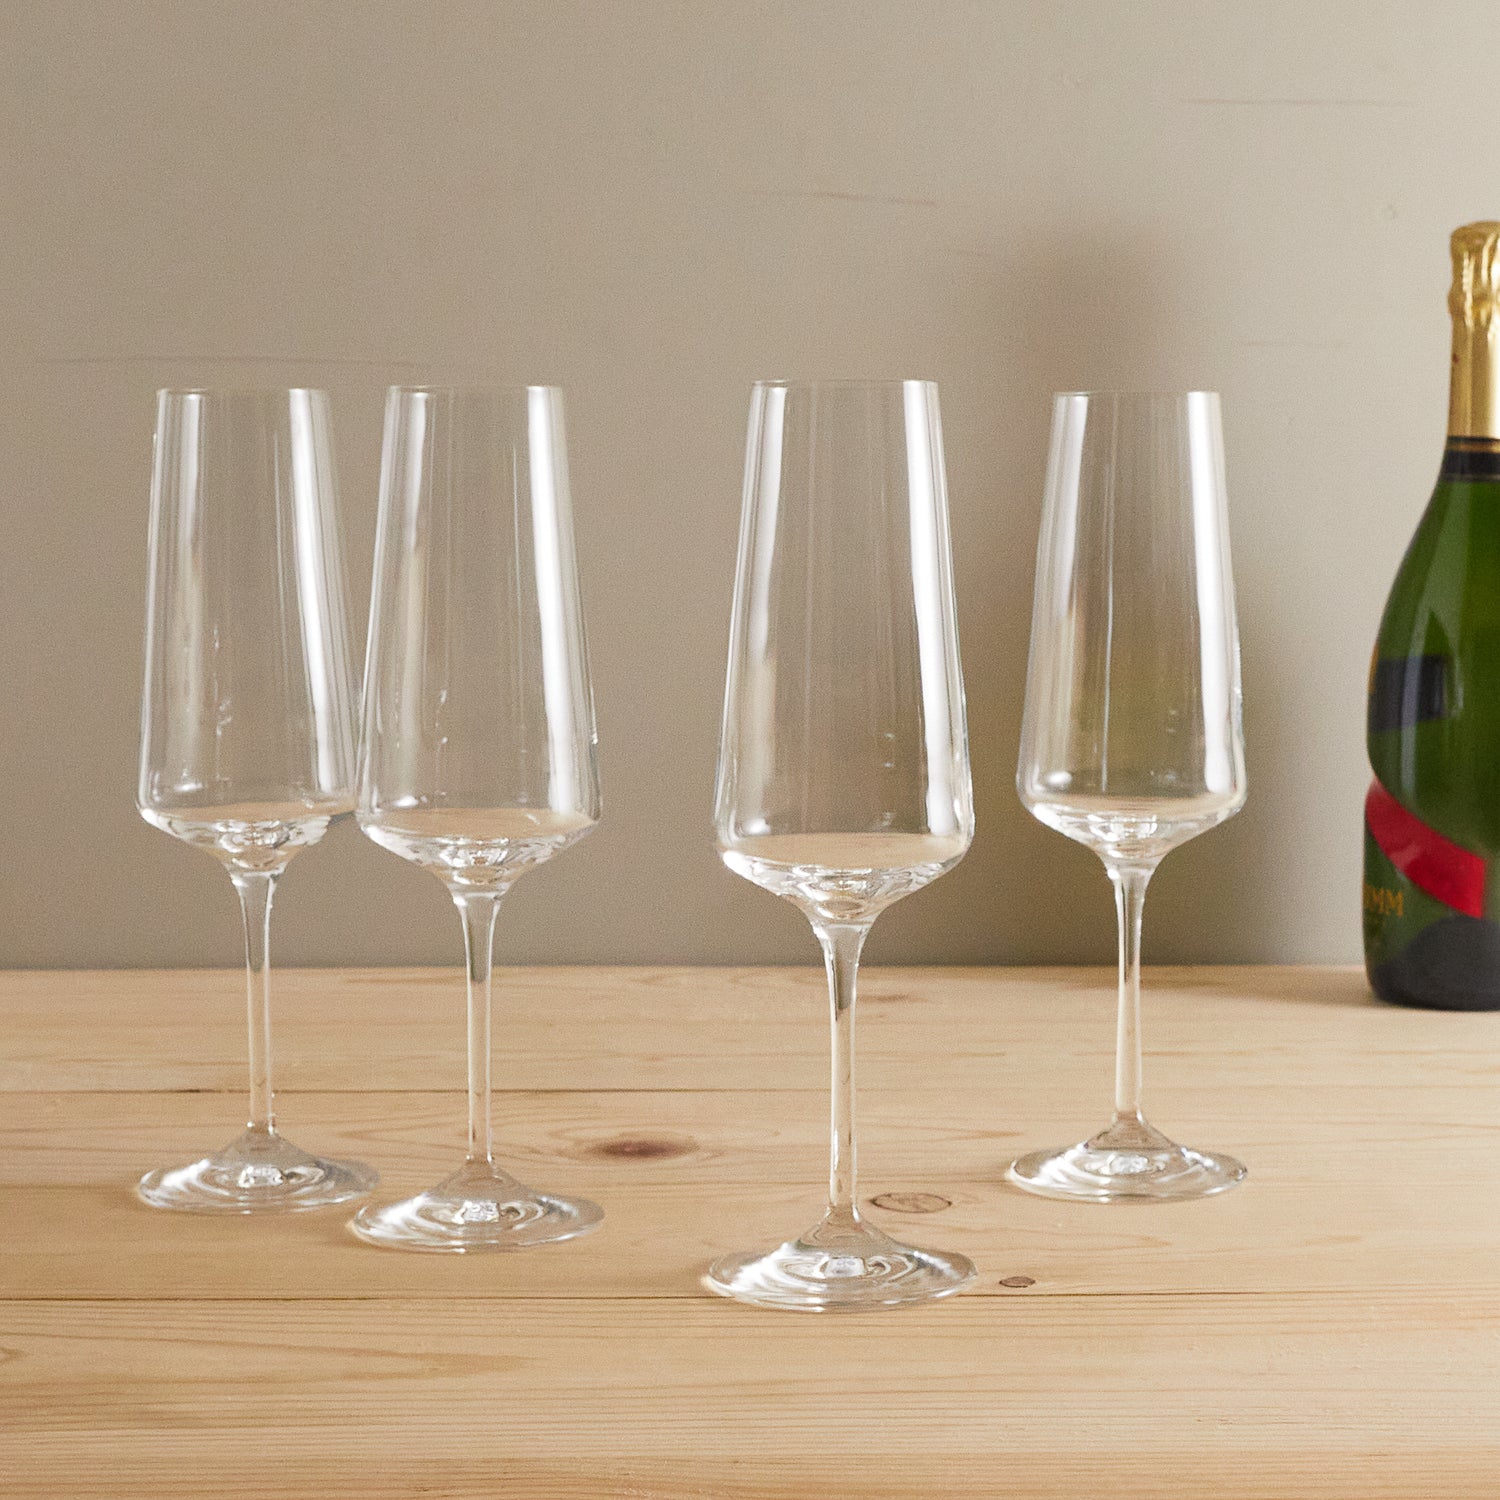 Schott Zwiesel Pure Champagne Glasses / Flute - Set of 6